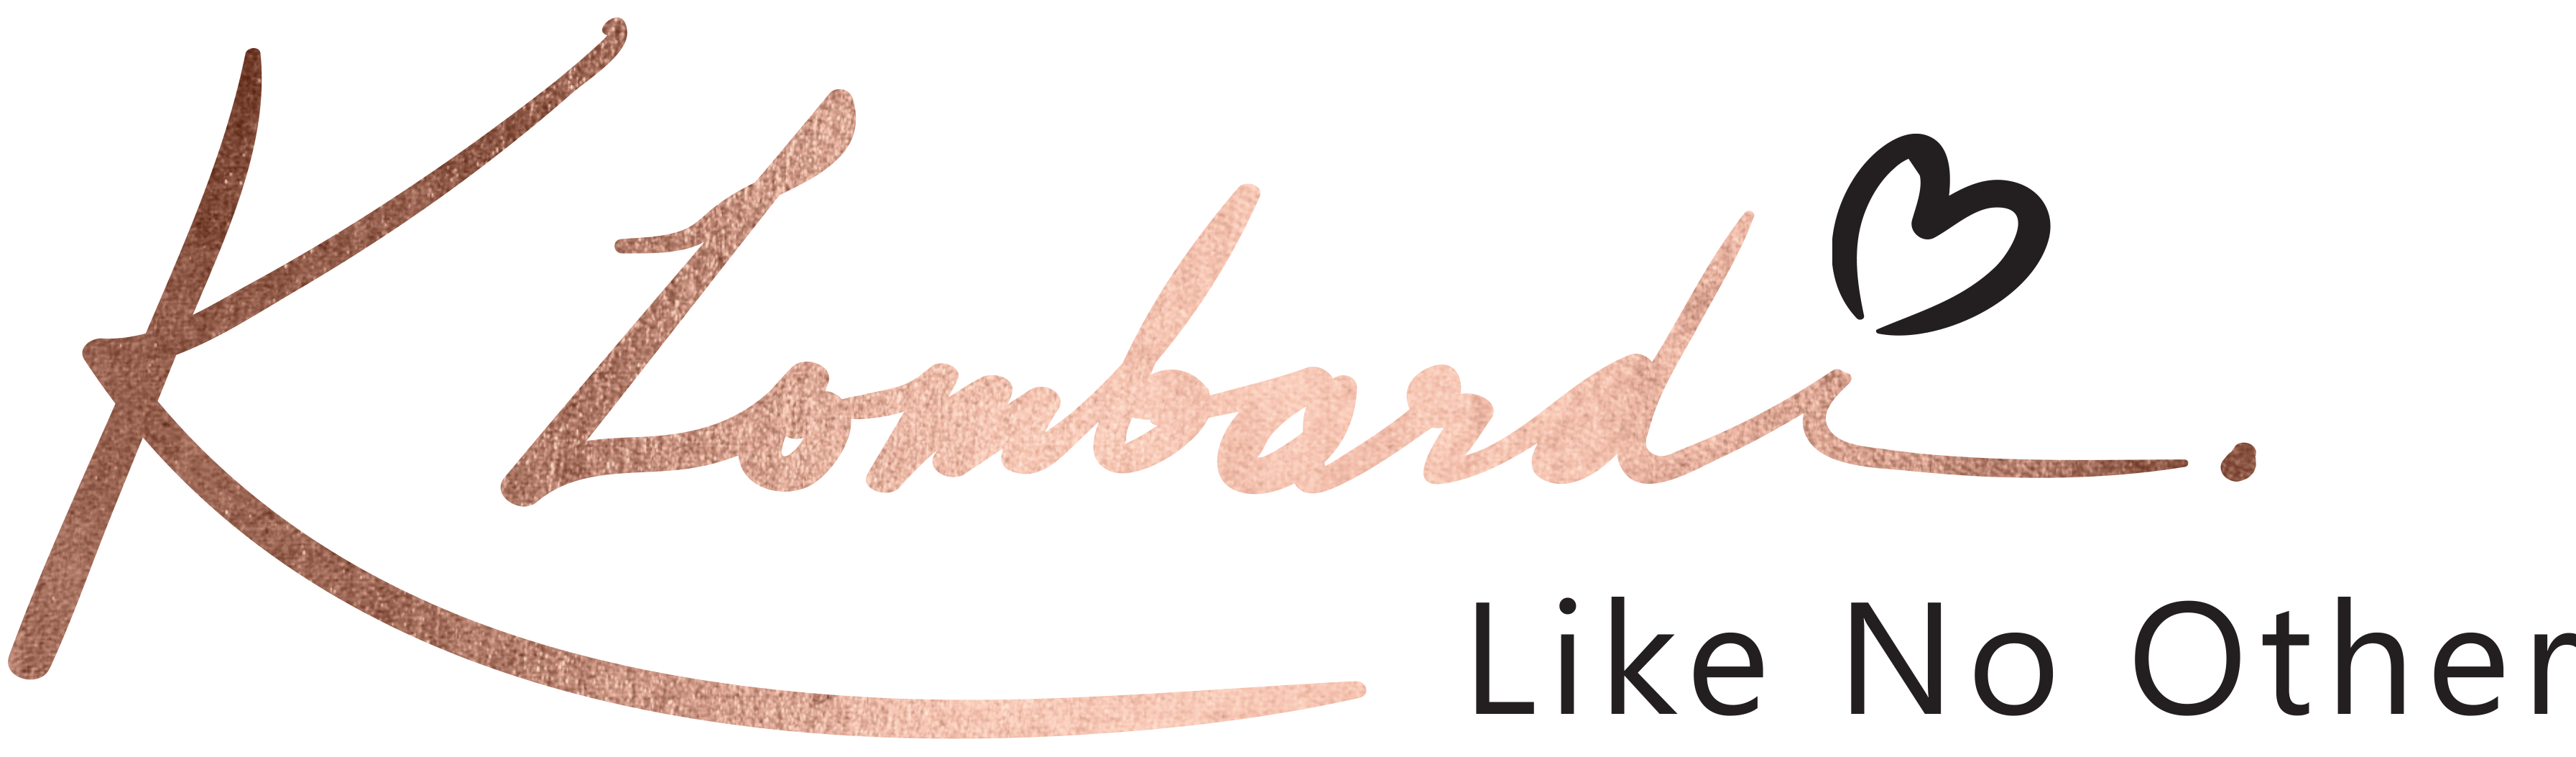 K Lombardi Brand